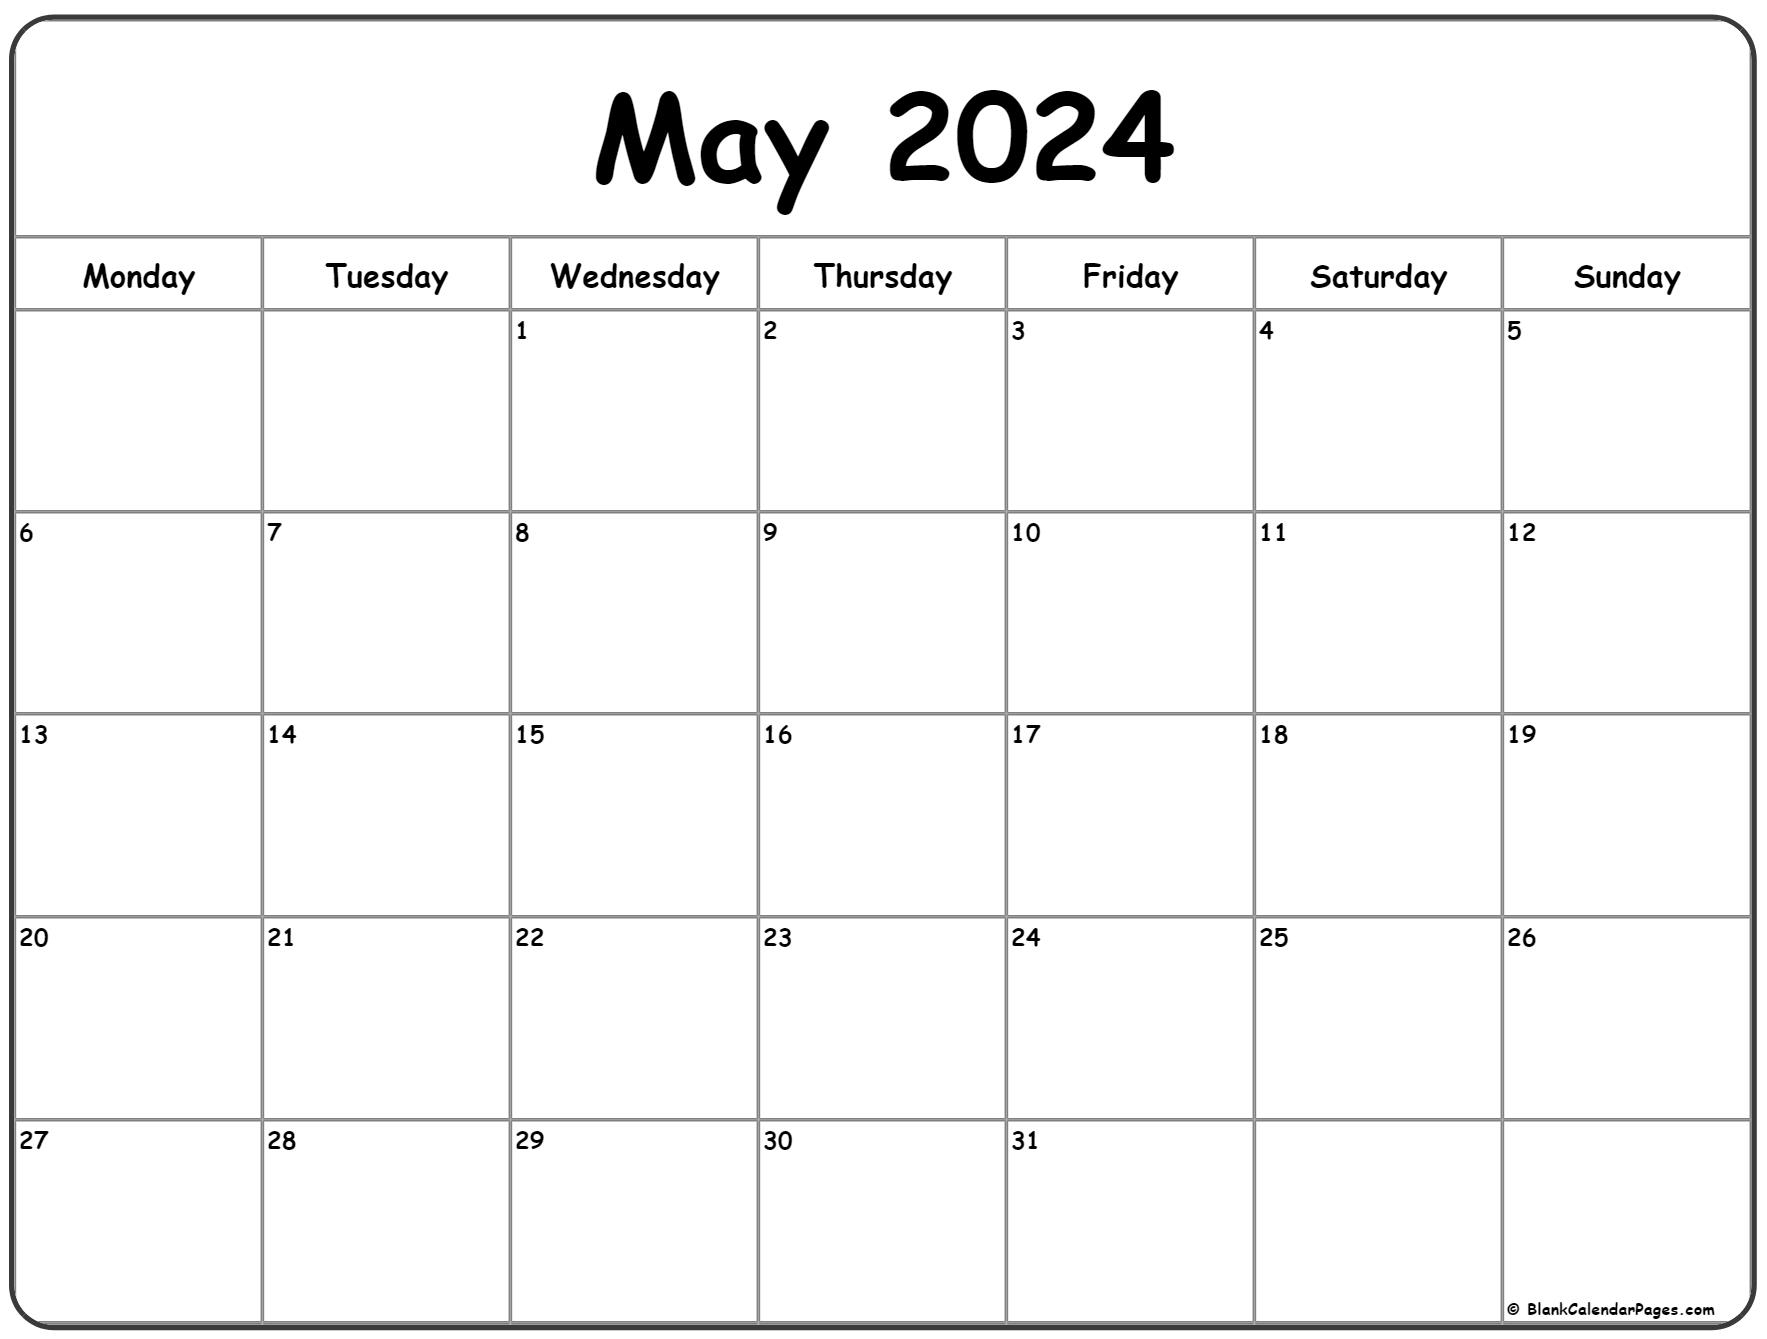 May 2024 Monday Calendar | Monday To Sunday for May Weekly Calendar 2024 Printable